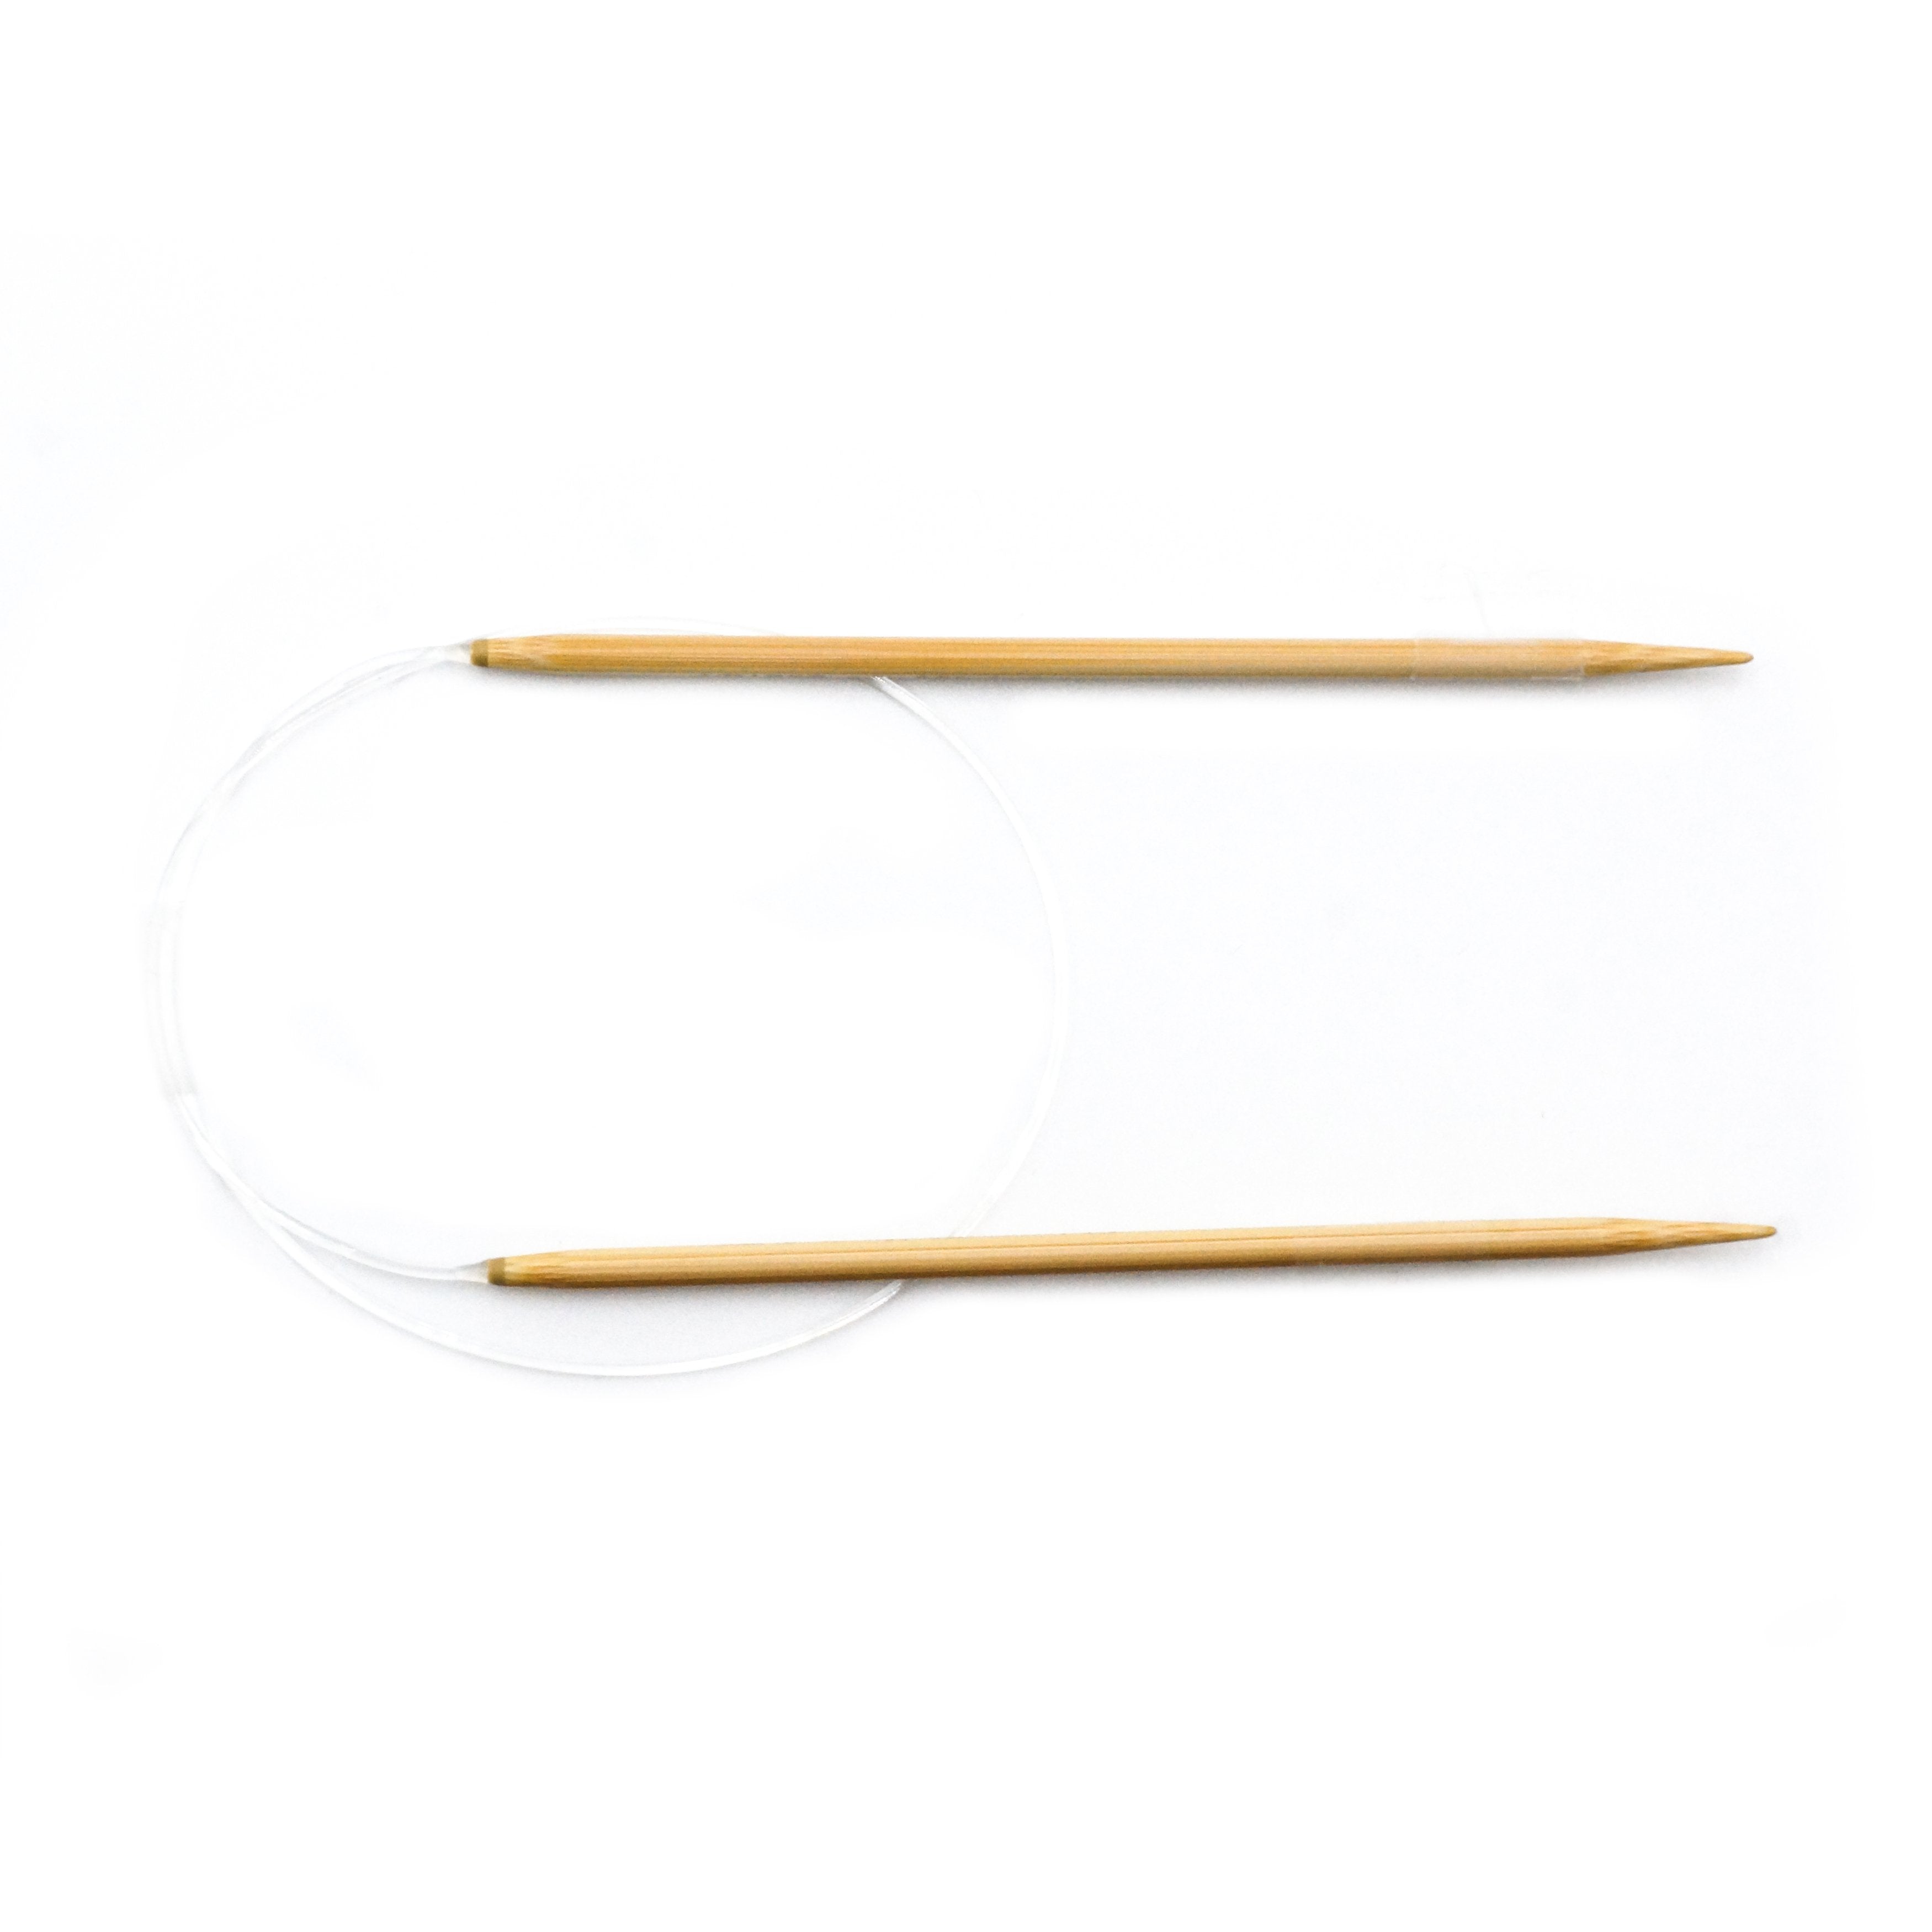 Takumi Bamboo Interchangeable Circular Knitting Needles-Size 6/4mm